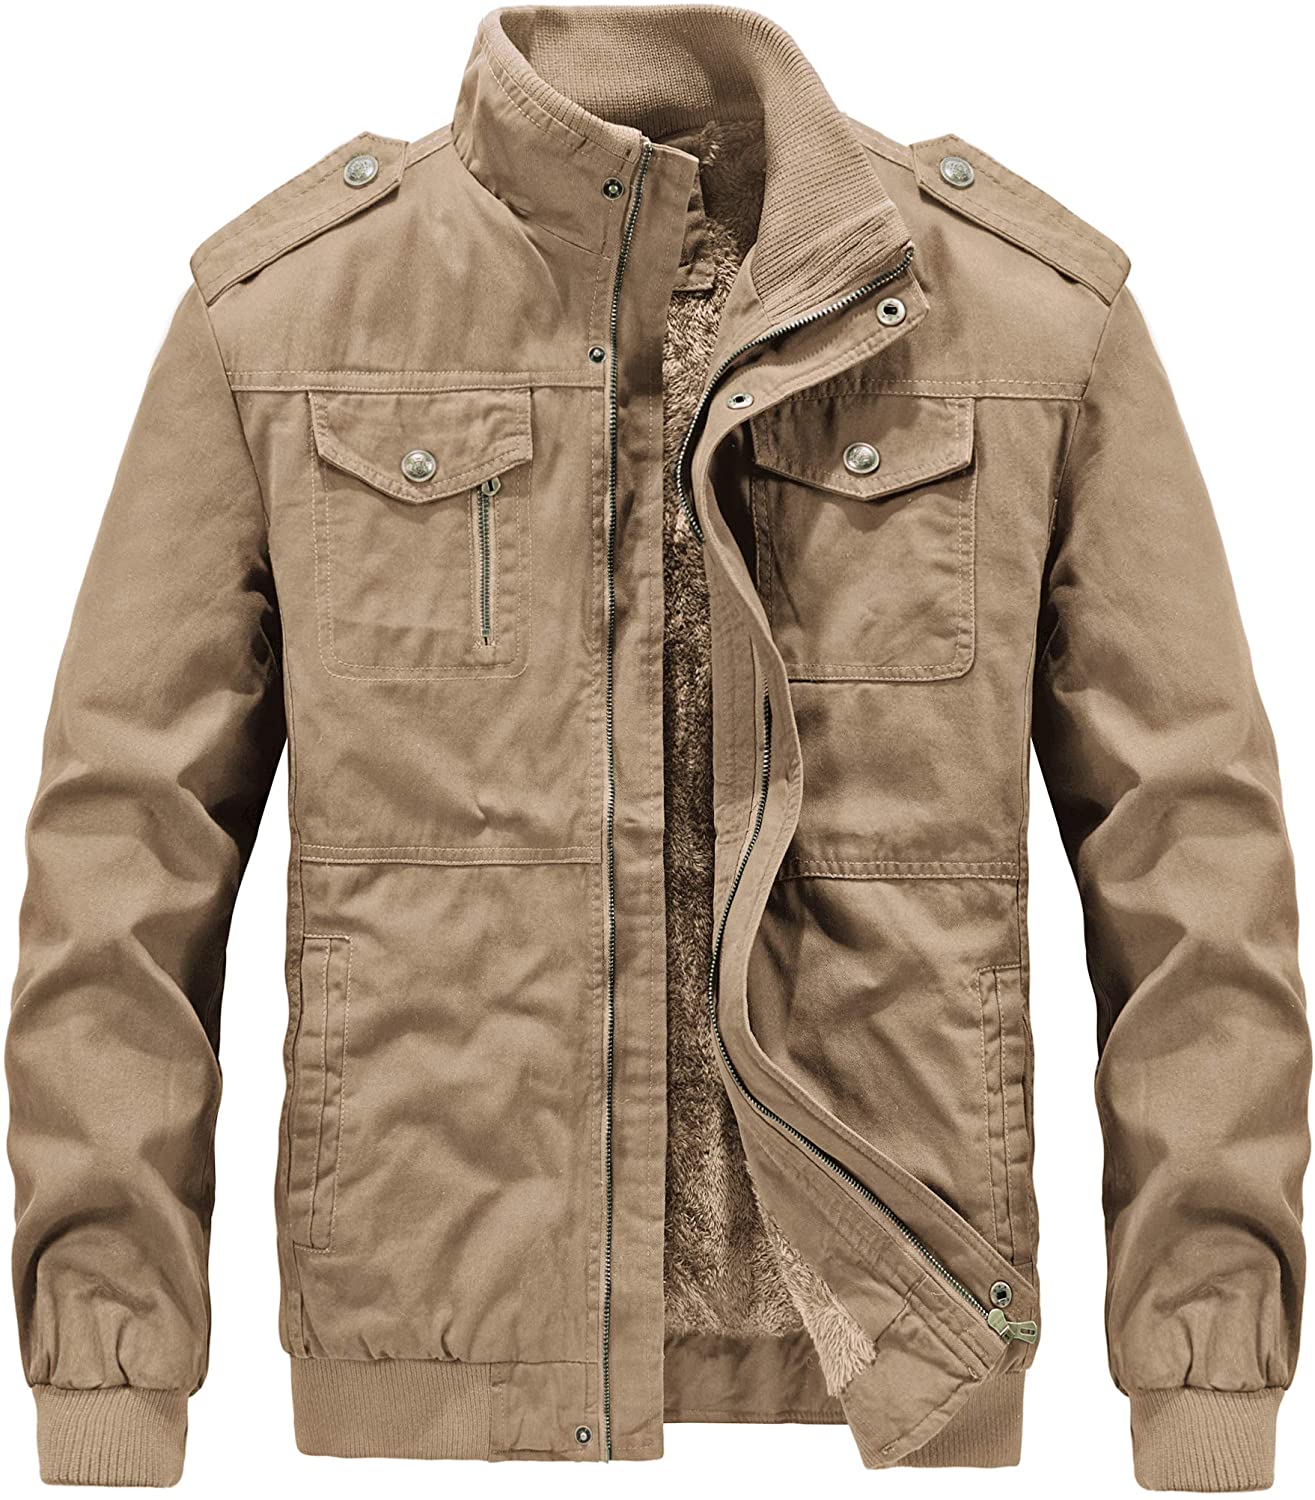 RongYue Men's Winter Thicken Cotton Military Jacket Fleece Fur